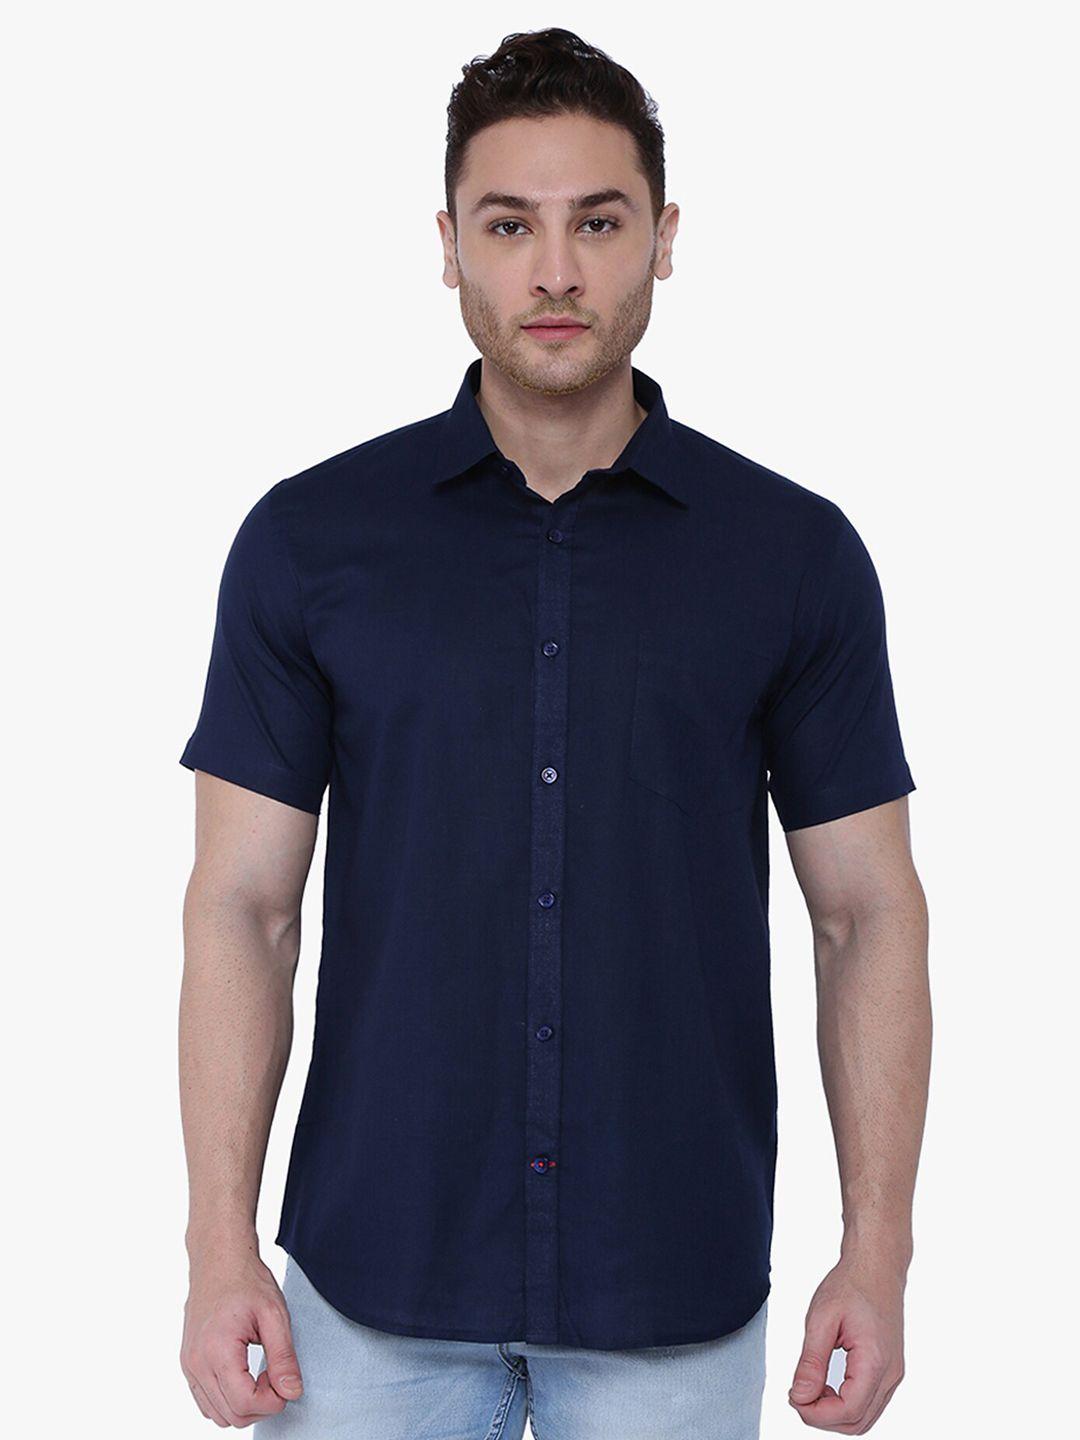 southbay men smart tailored fit cotton linen casual shirt